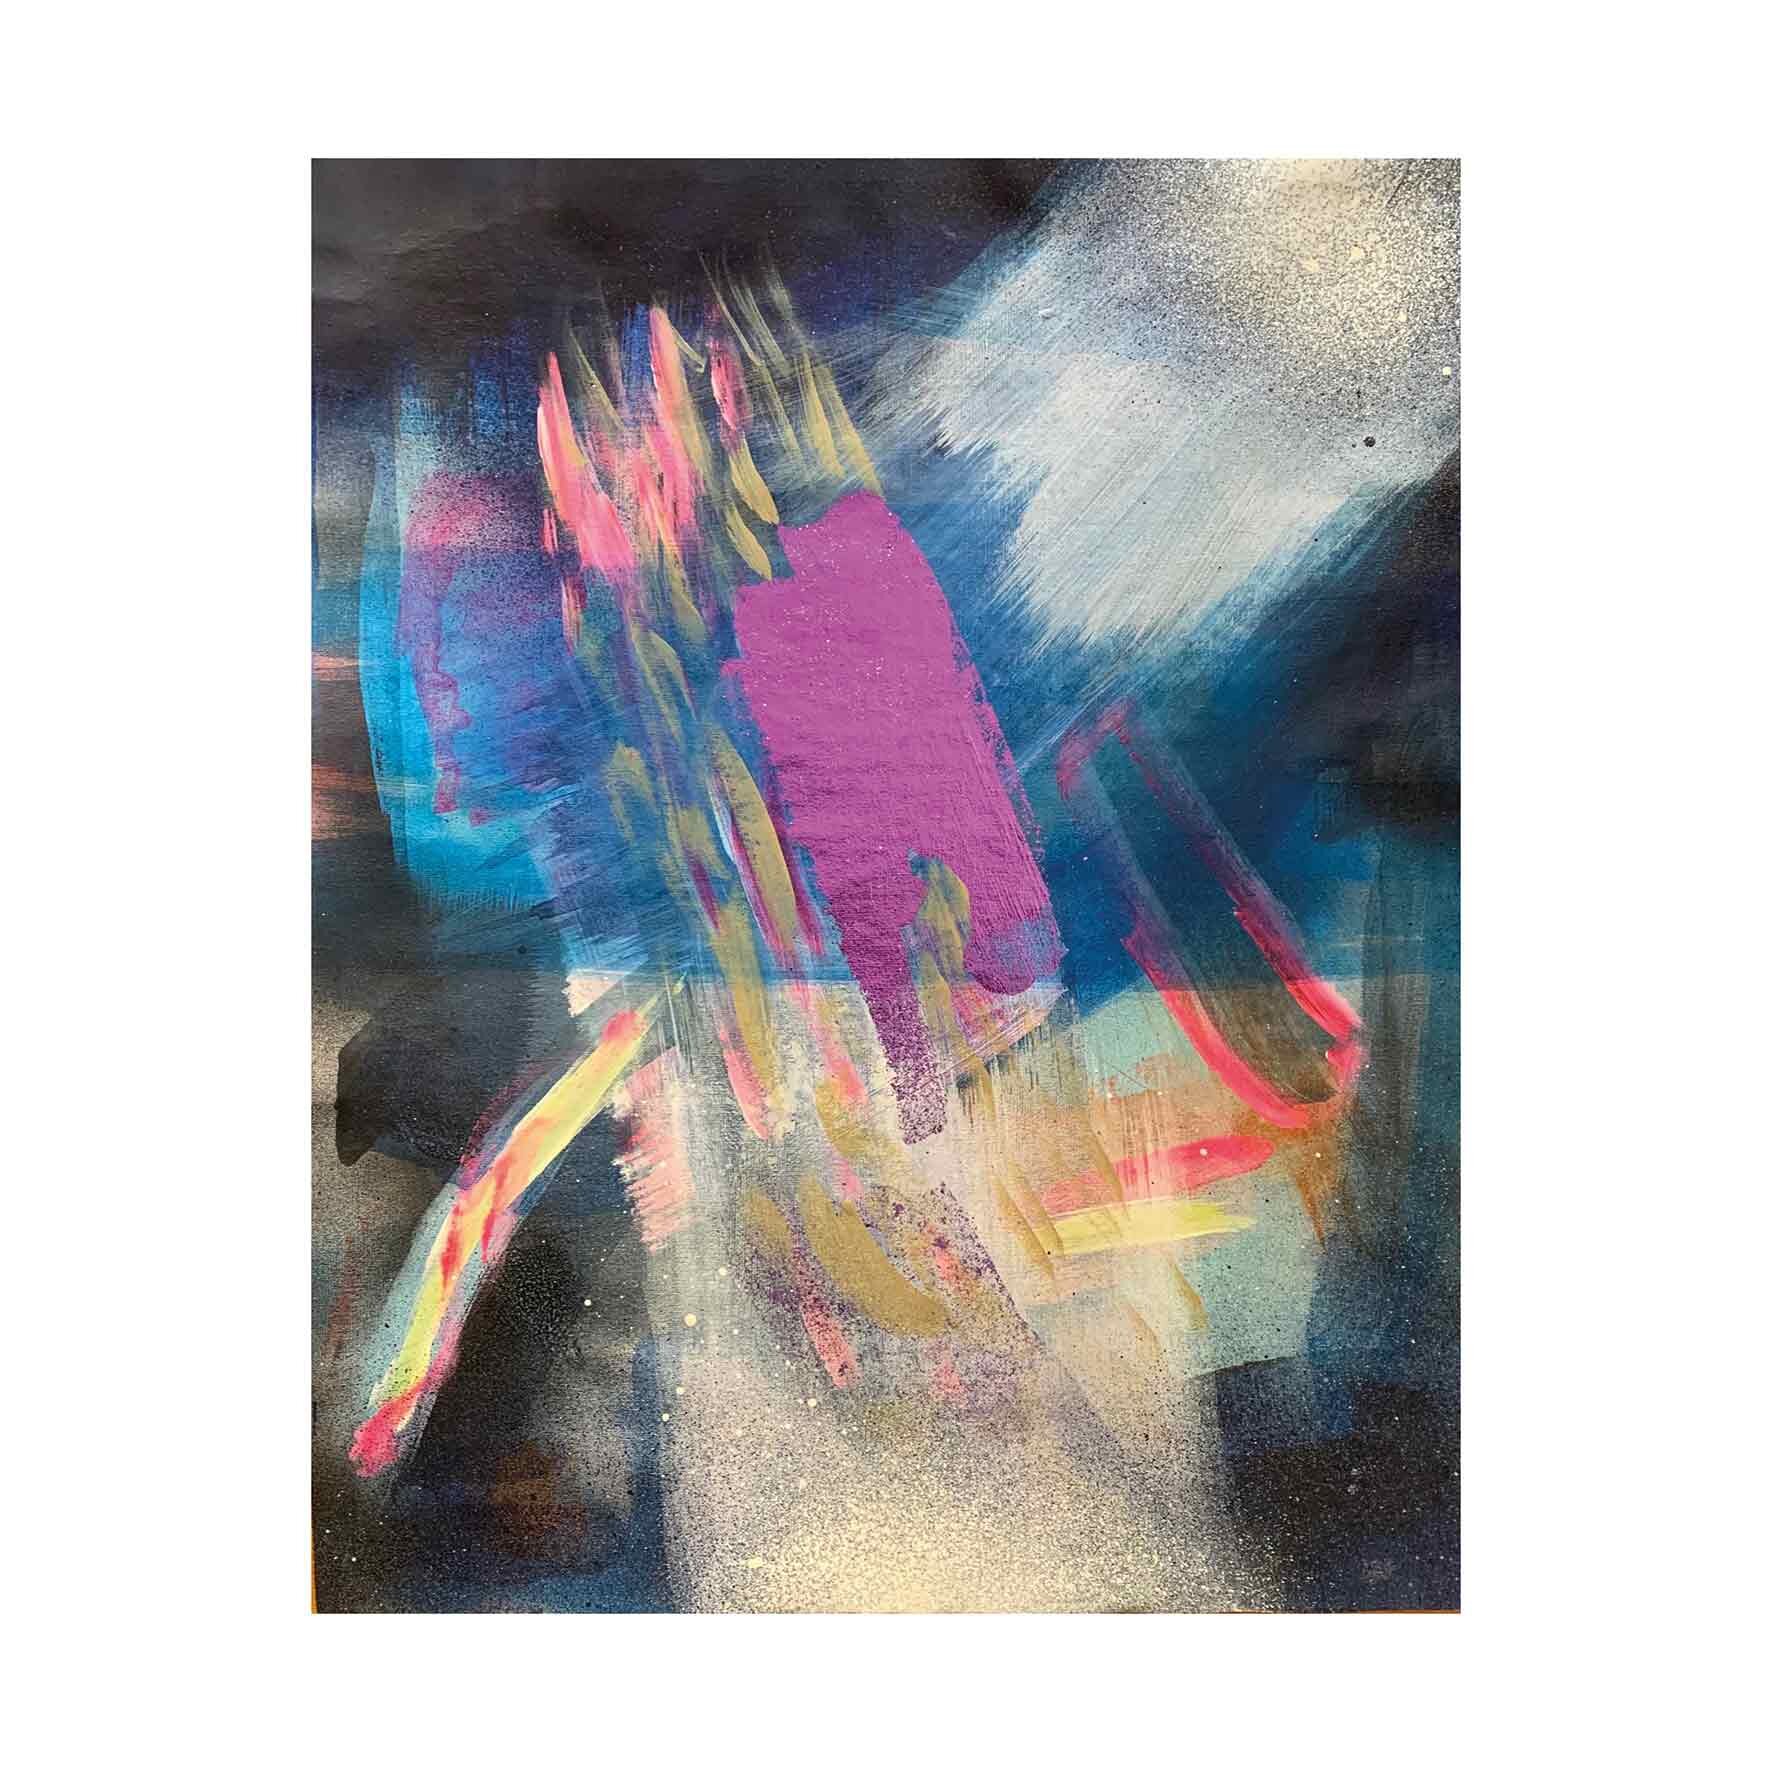 JaninWalter_Its_over_40,5x50cm_acryliconcanvaspaper,2020.jpg